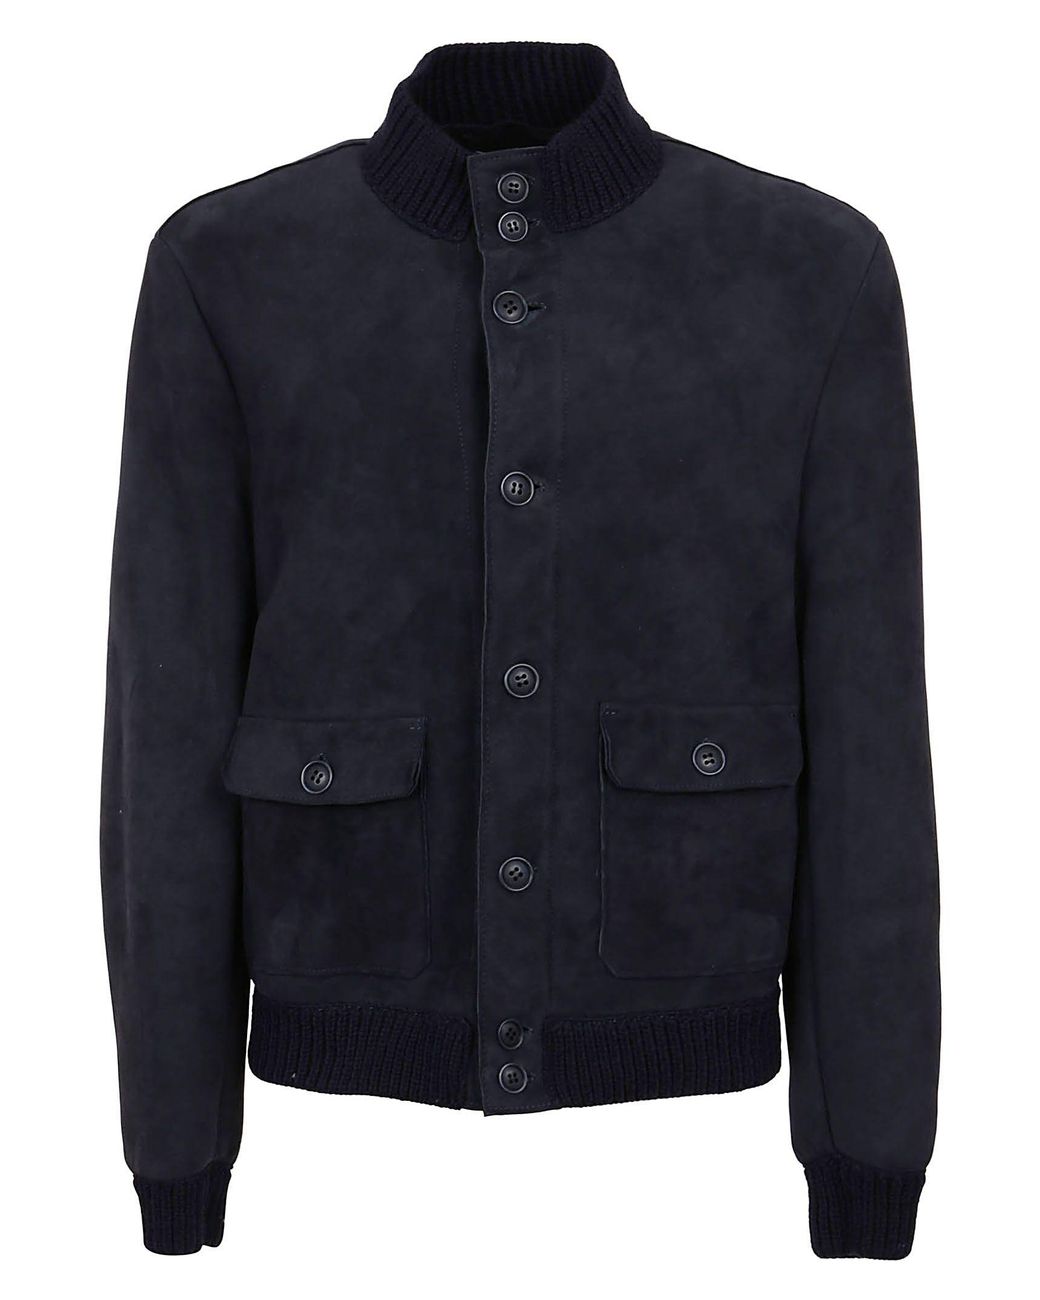 Salvatore Santoro Suede Outerwear Jacket in Blue for Men - Lyst